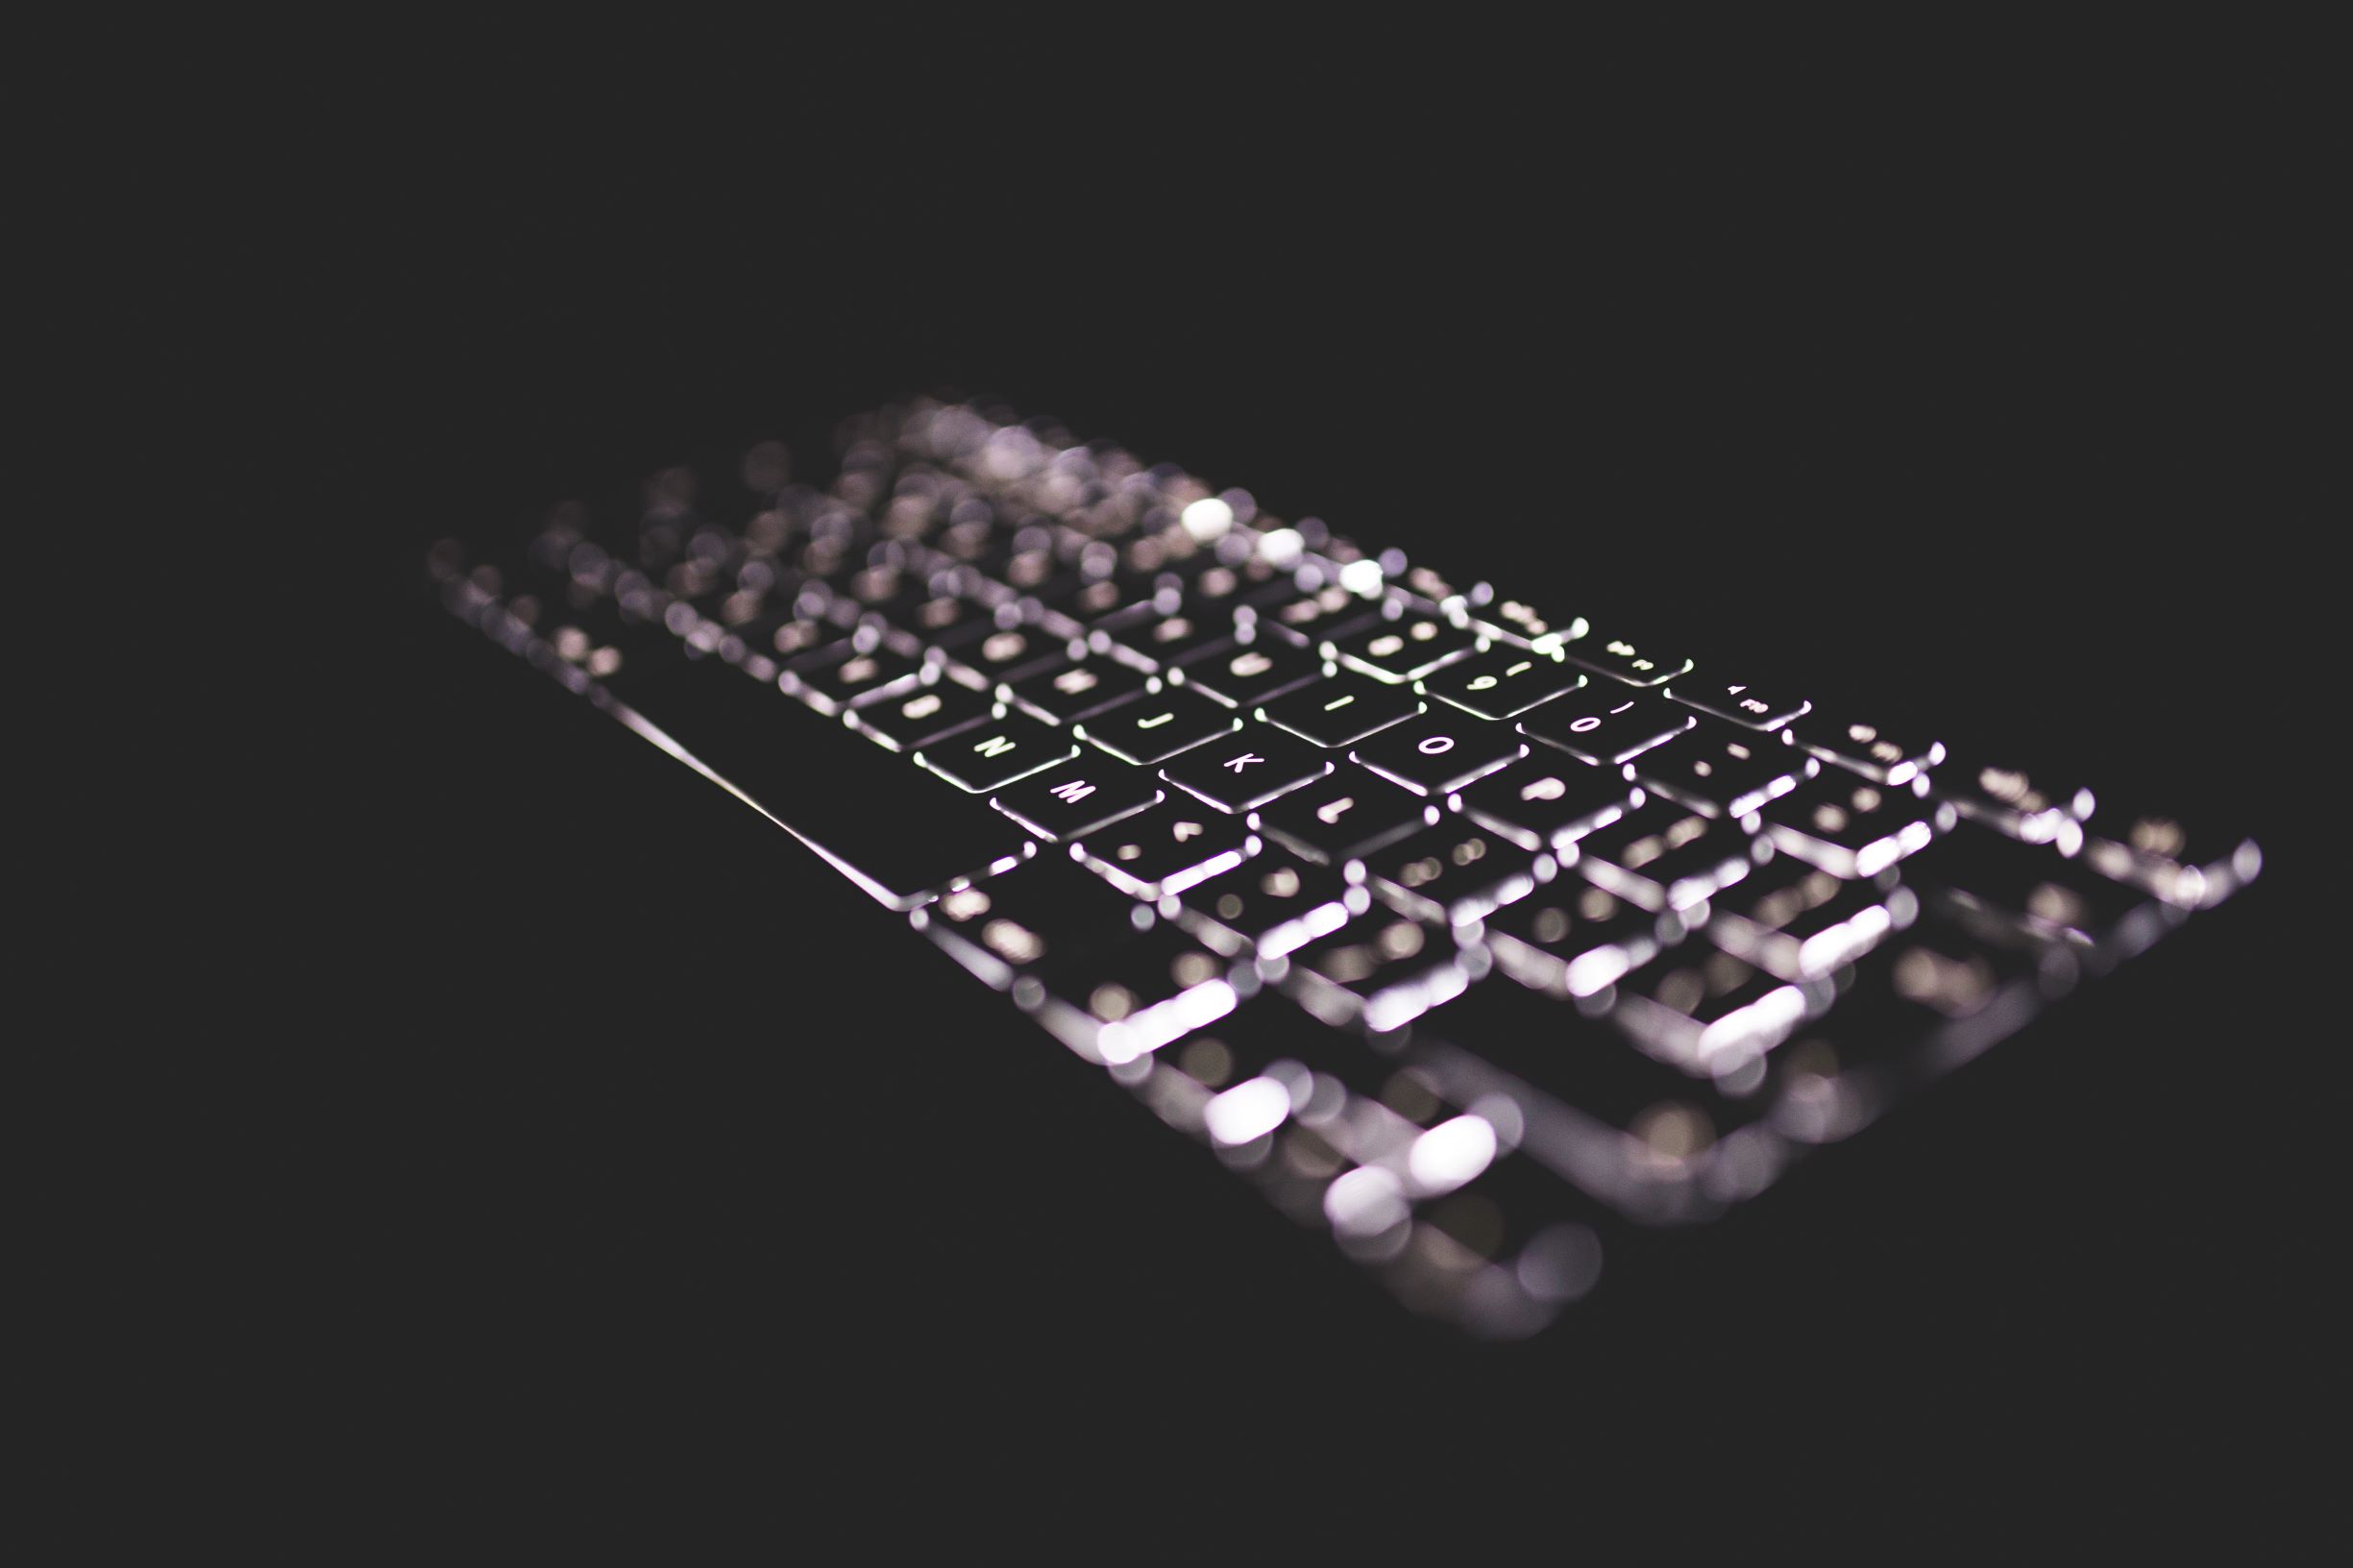 Image of computer keyboard